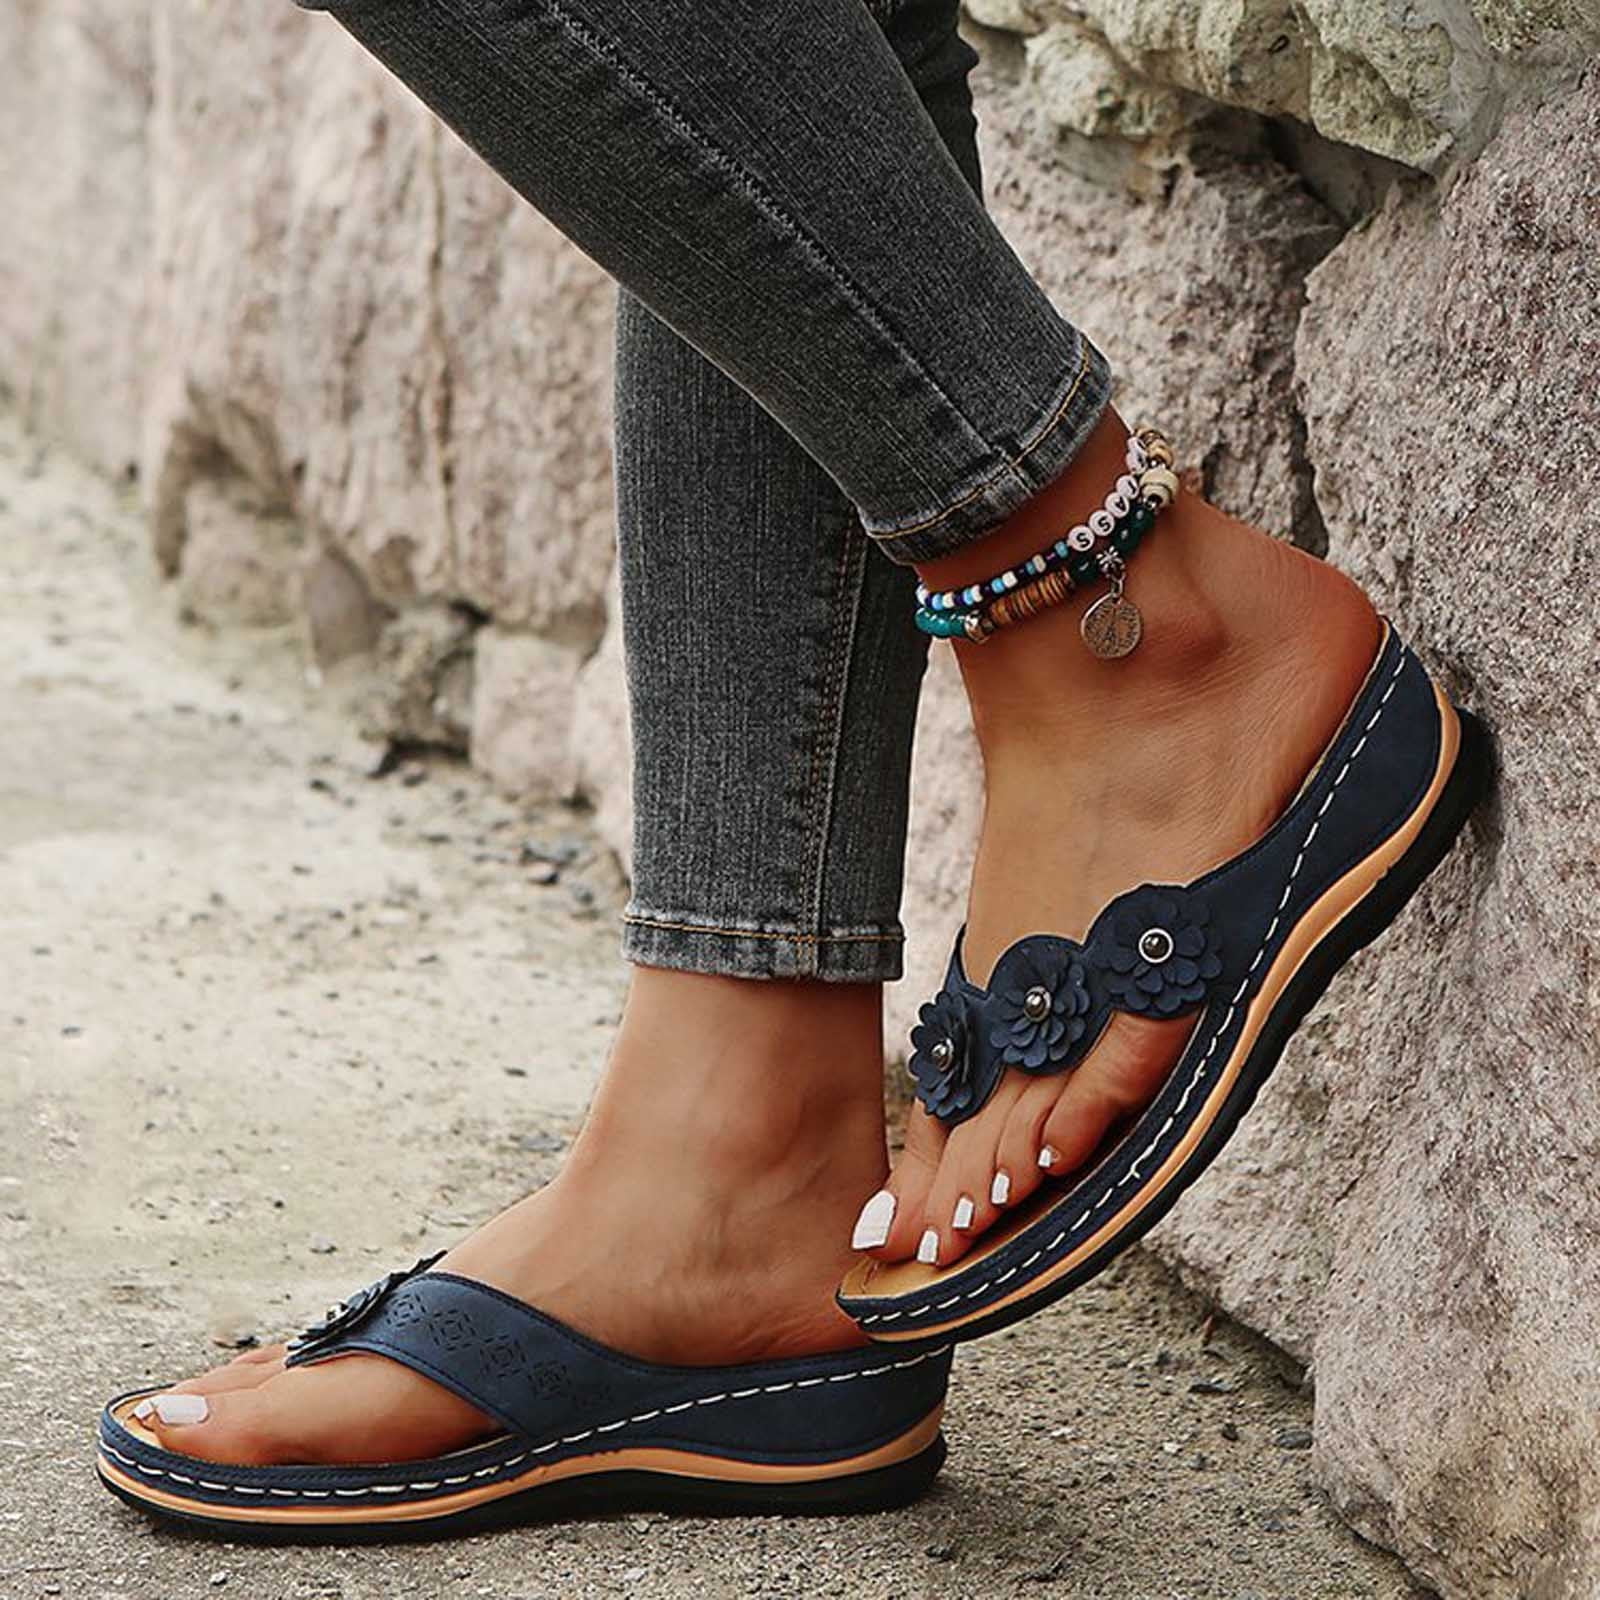 Ecqkame Women Shoes Slope Heel Low Heeled Sandals Plus Size Casual